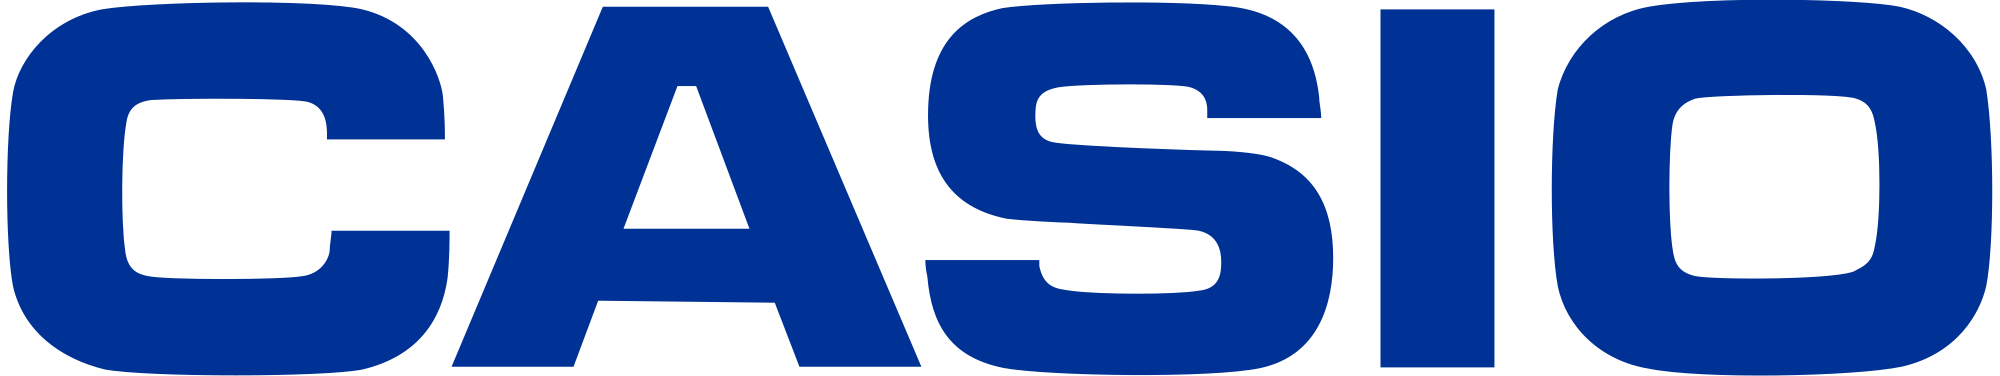 Image result for casio logo